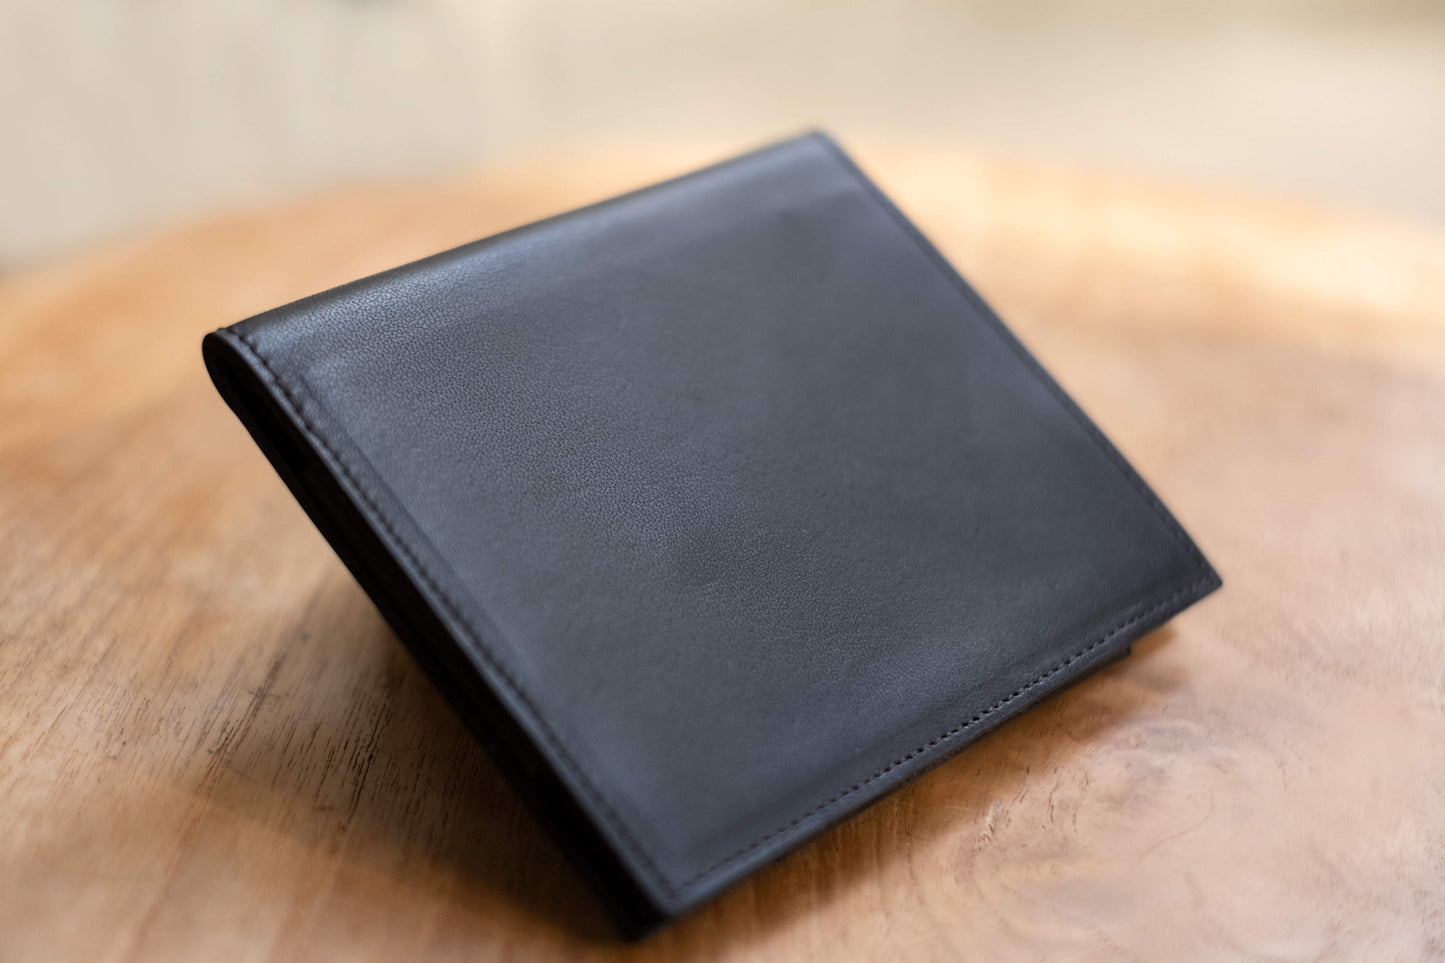 Tenuis TL 究極の薄い革財布